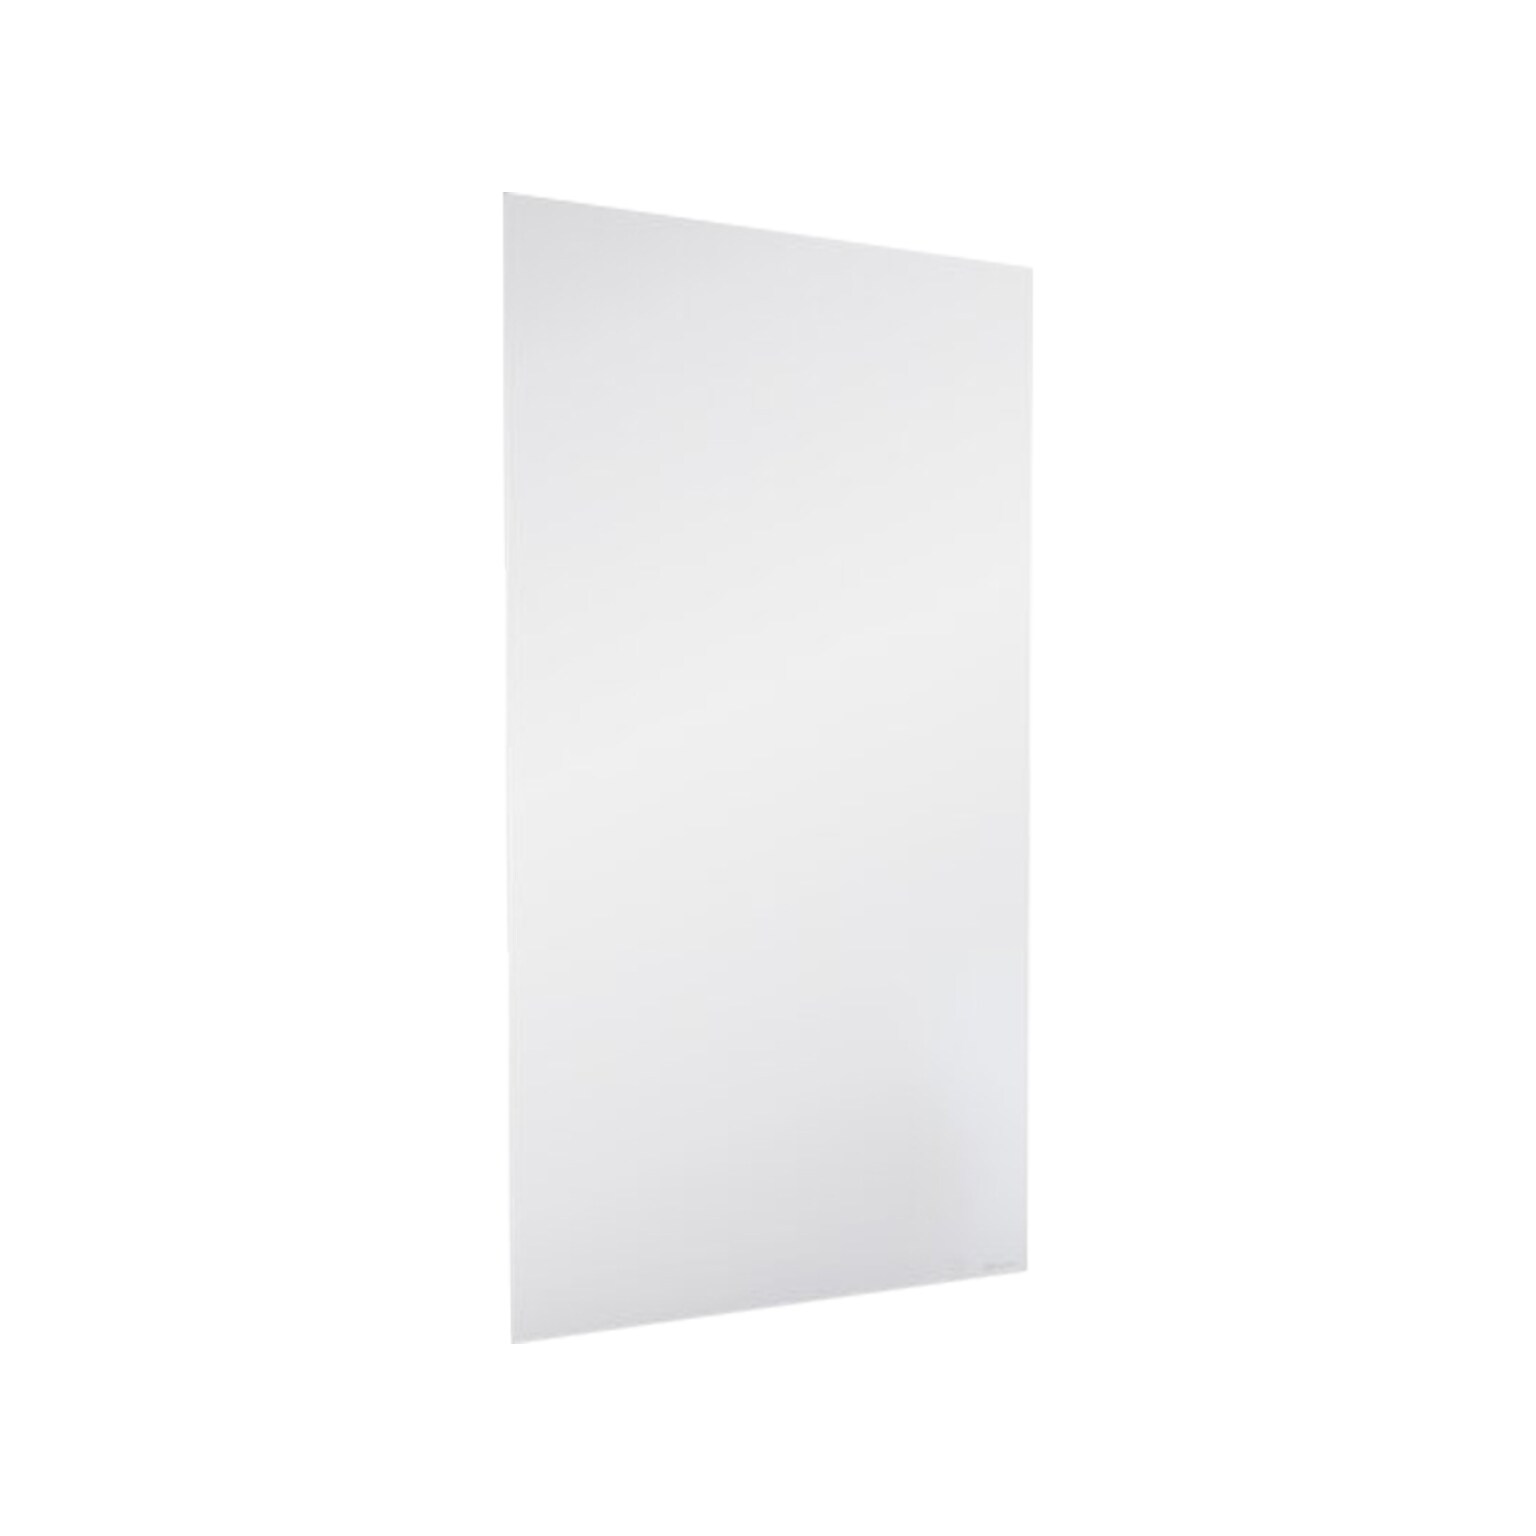 Quartet InvisaMount Magnetic Glass Dry-Erase Whiteboard, 74 x 42 (Q0142741MW1)